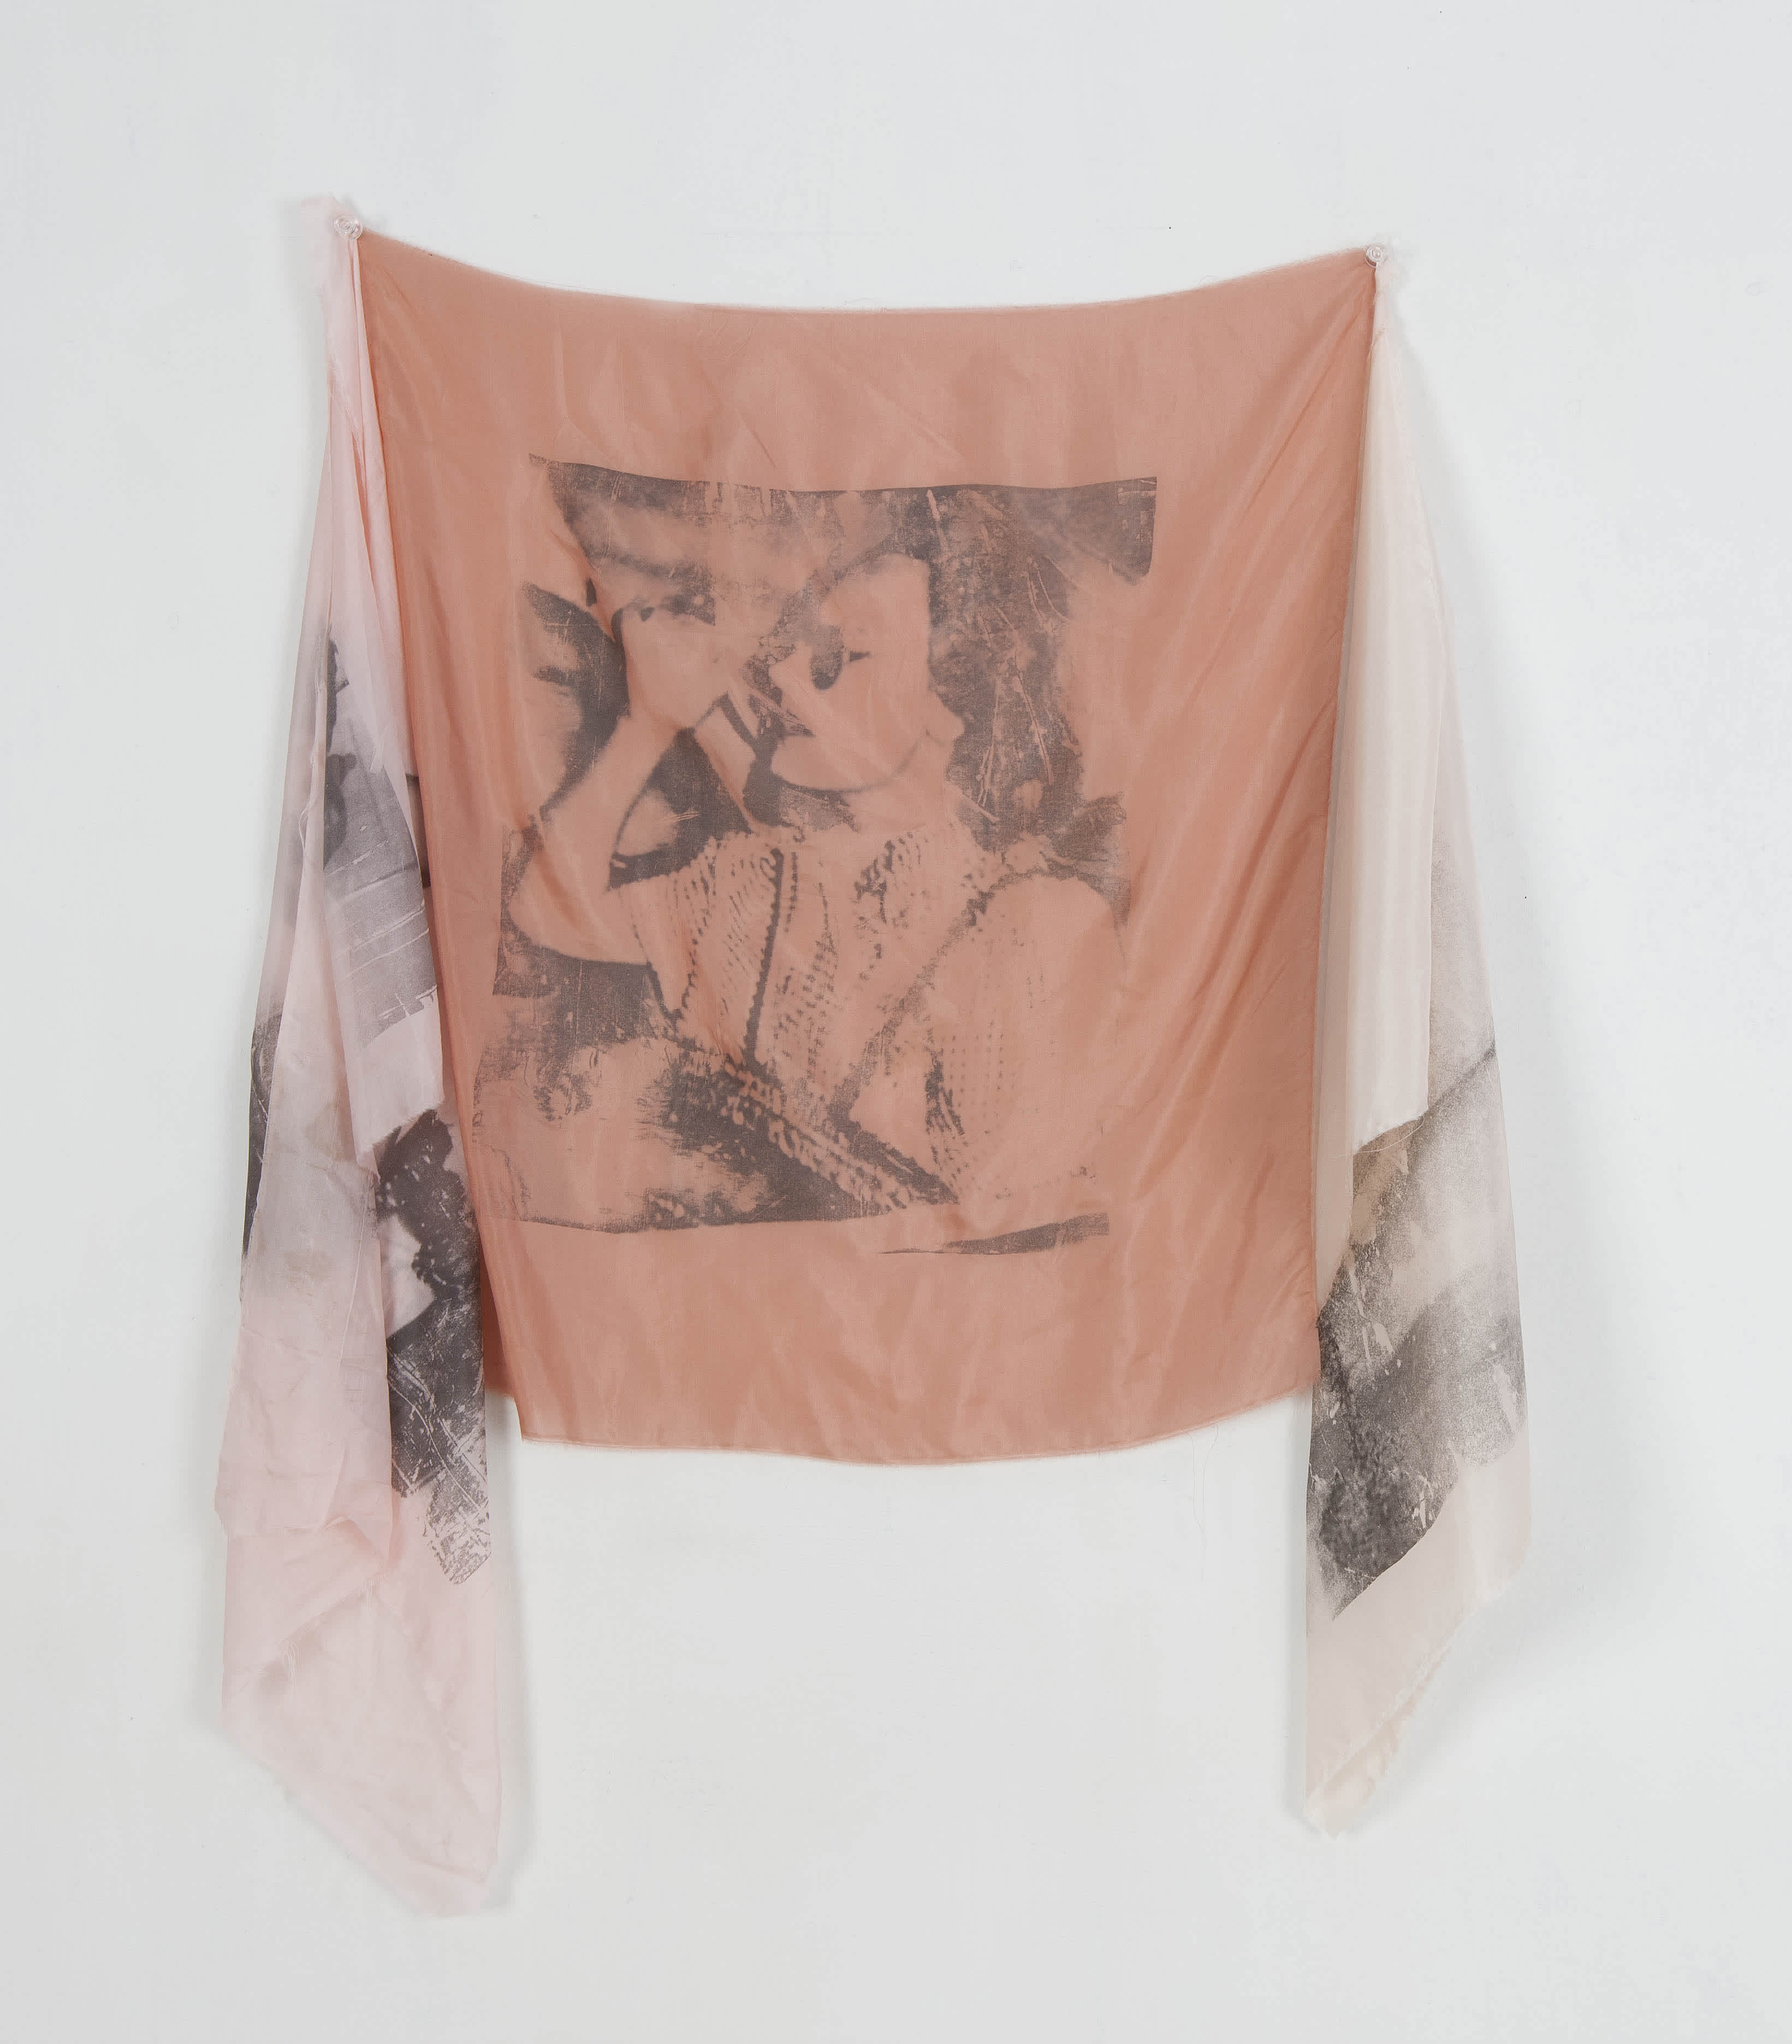 Print on fabric, Greta Garbo